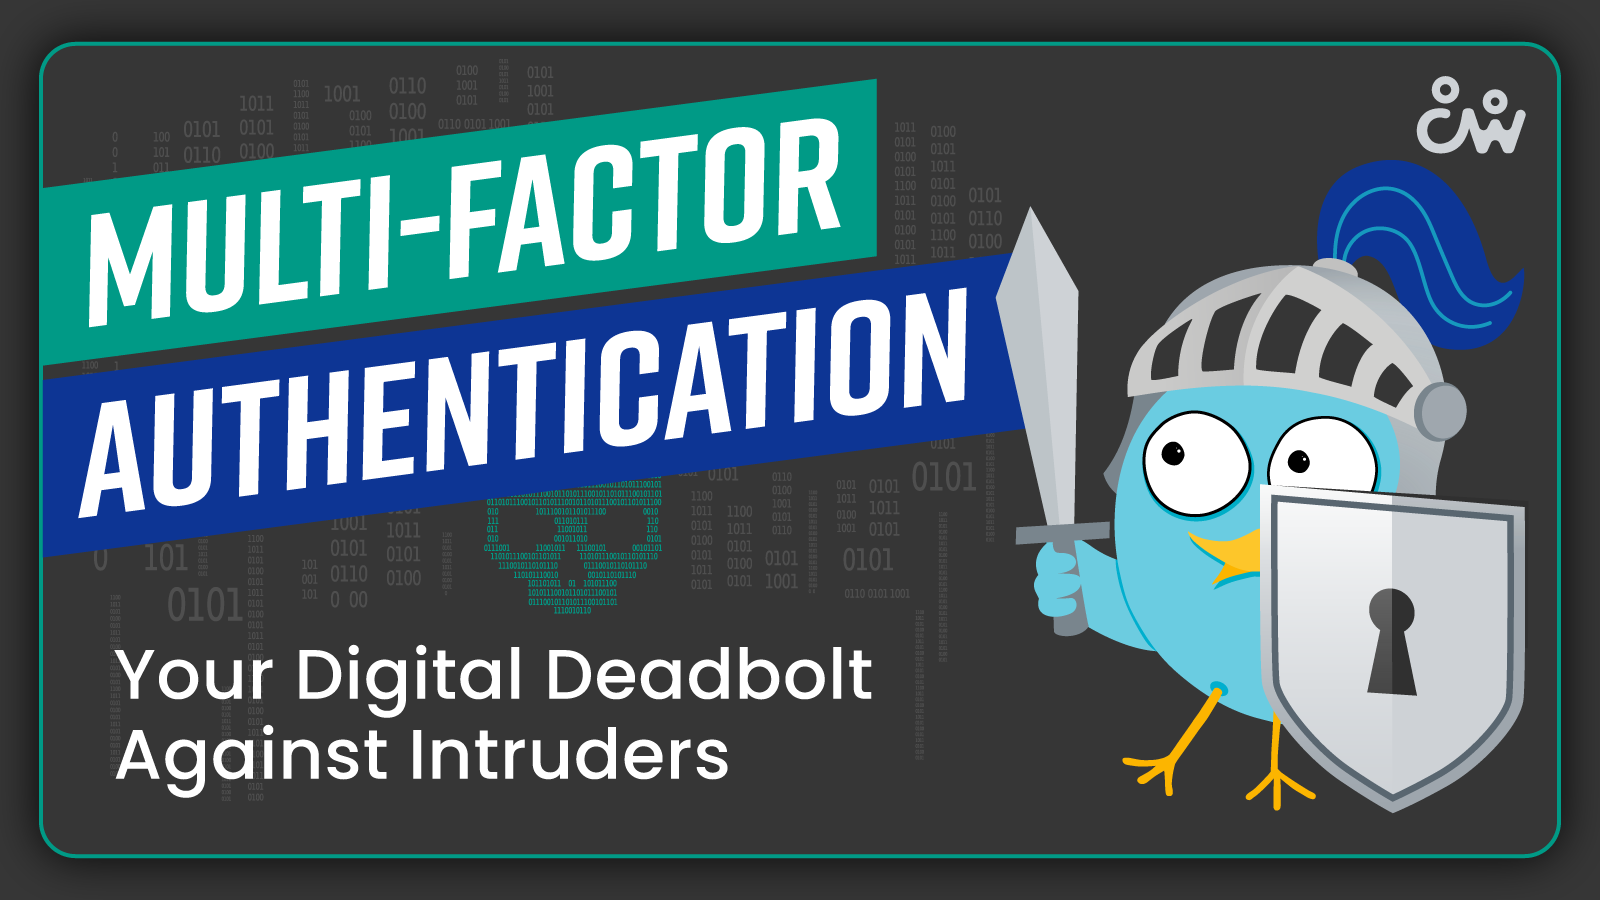 Multi-Factor Authentication: Your Digital Deadbolt Against Intruders